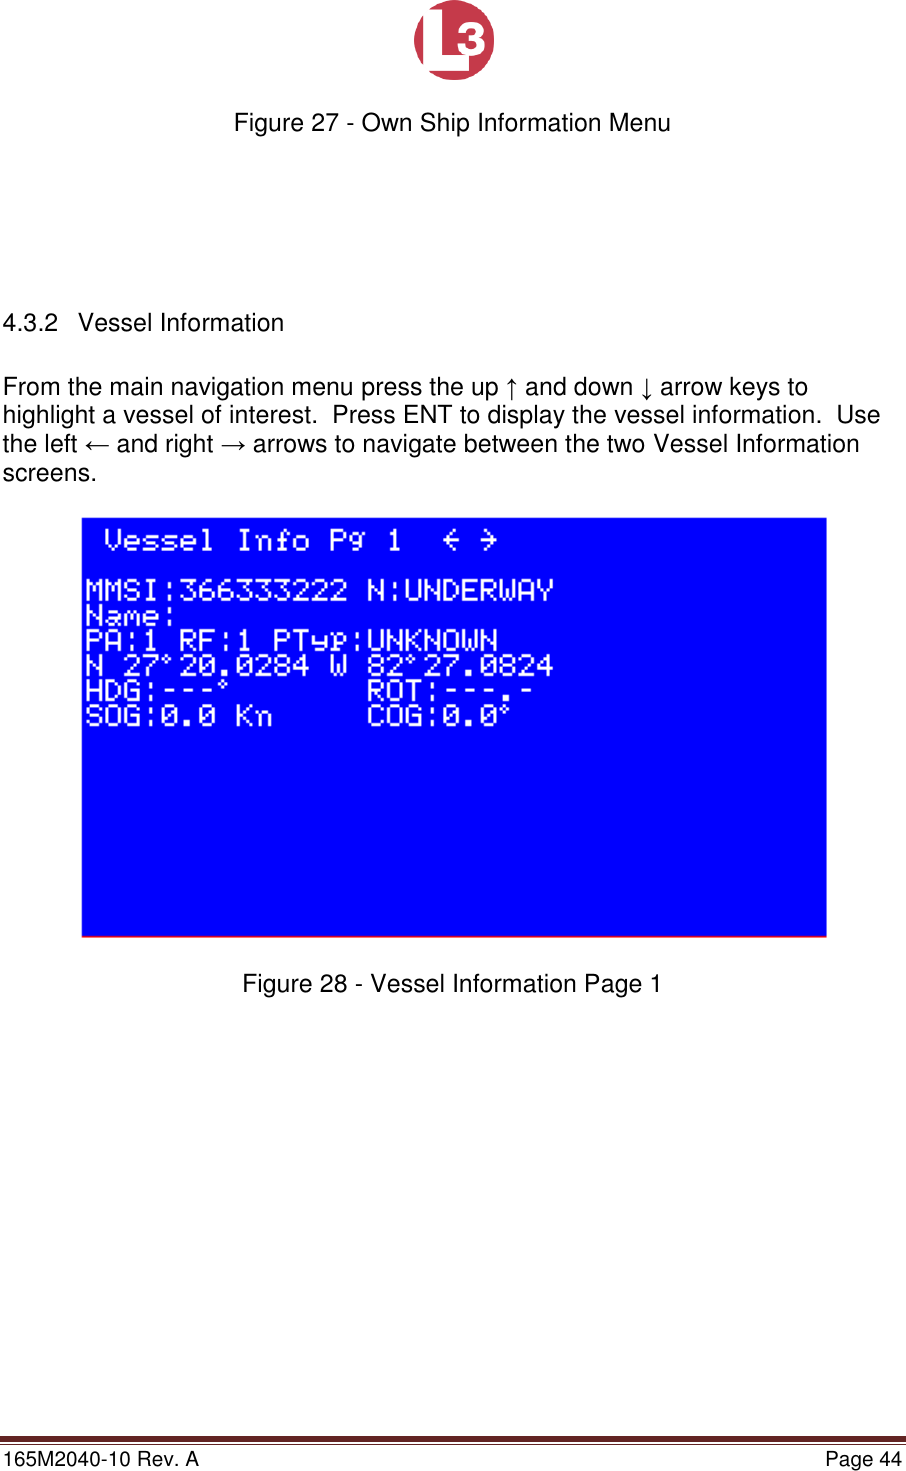 Page 44 of L3 Technologies AISA6 Shipboard Mobile AIS User Manual Memory Verification Procedure